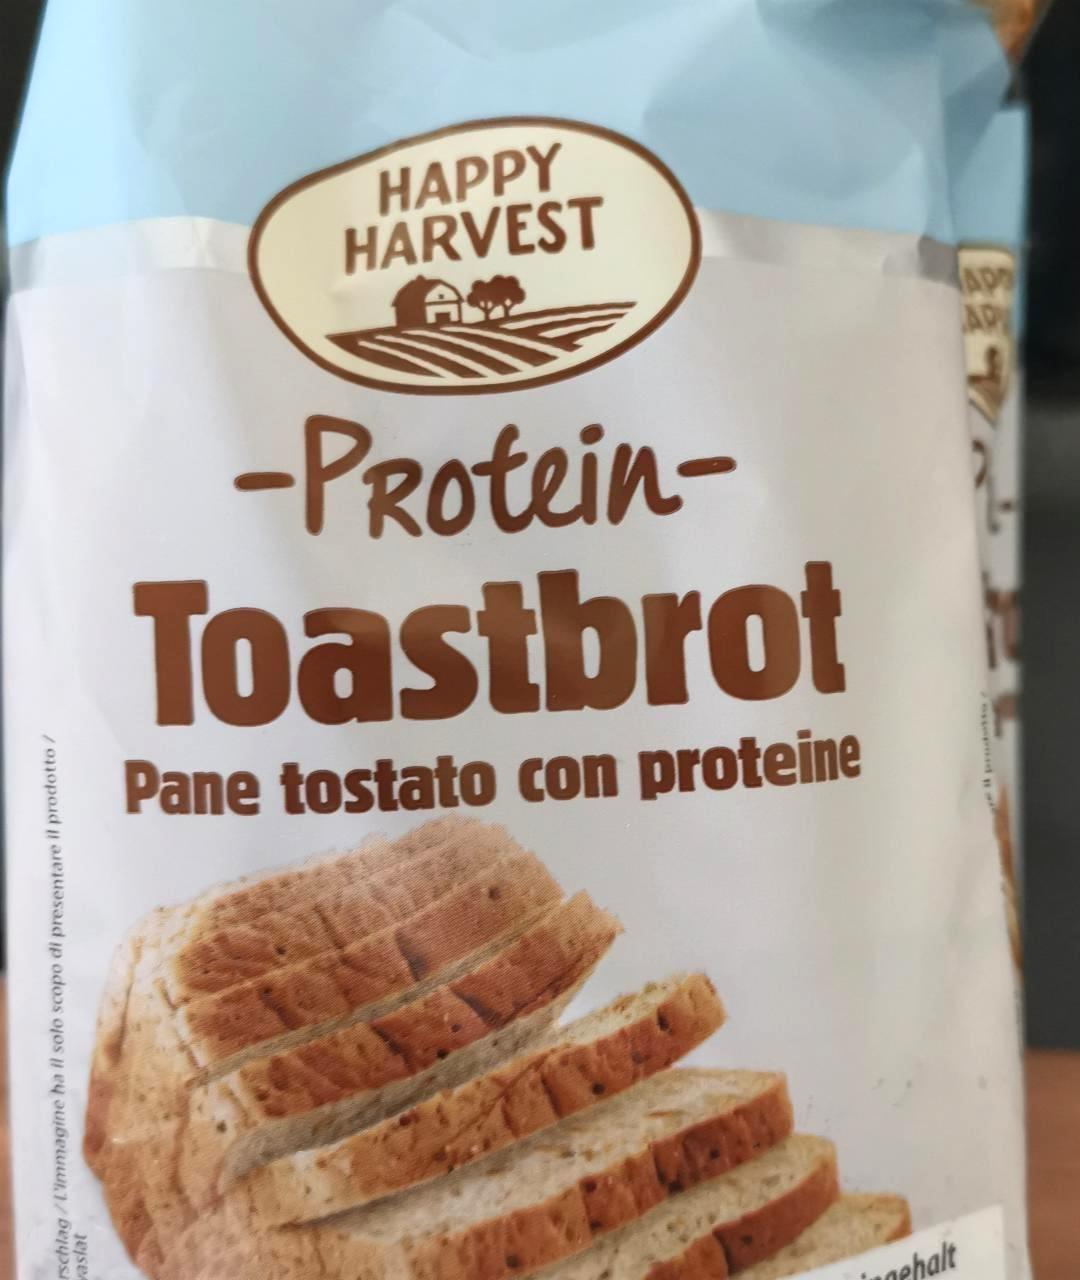 Képek - Protein toastbrot Happy Harvest